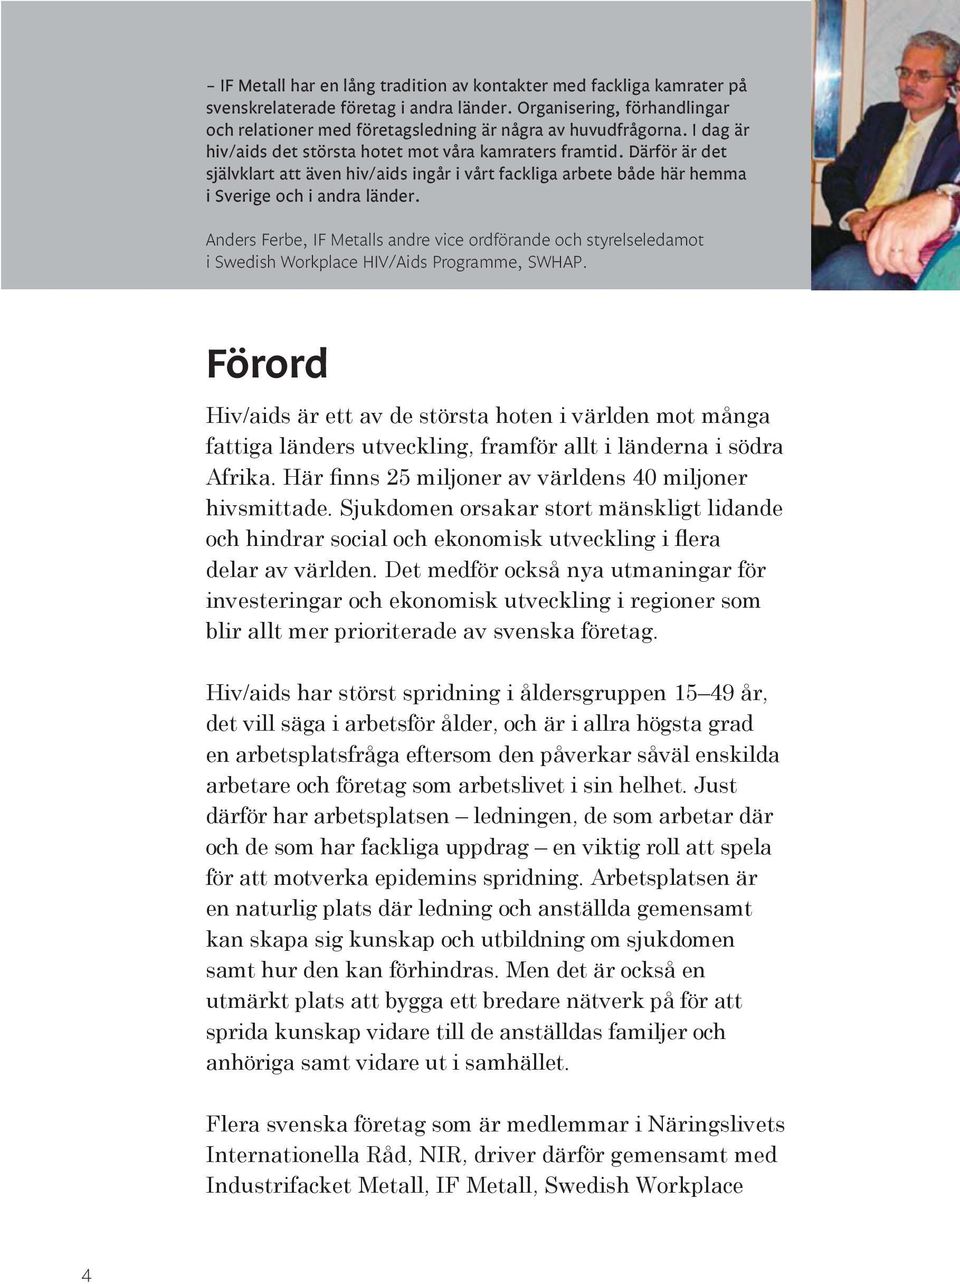 Anders Ferbe, IF Metalls andre vice ordförande och styrelseledamot i Swedish Workplace HIV/Aids Programme, SWHAP.